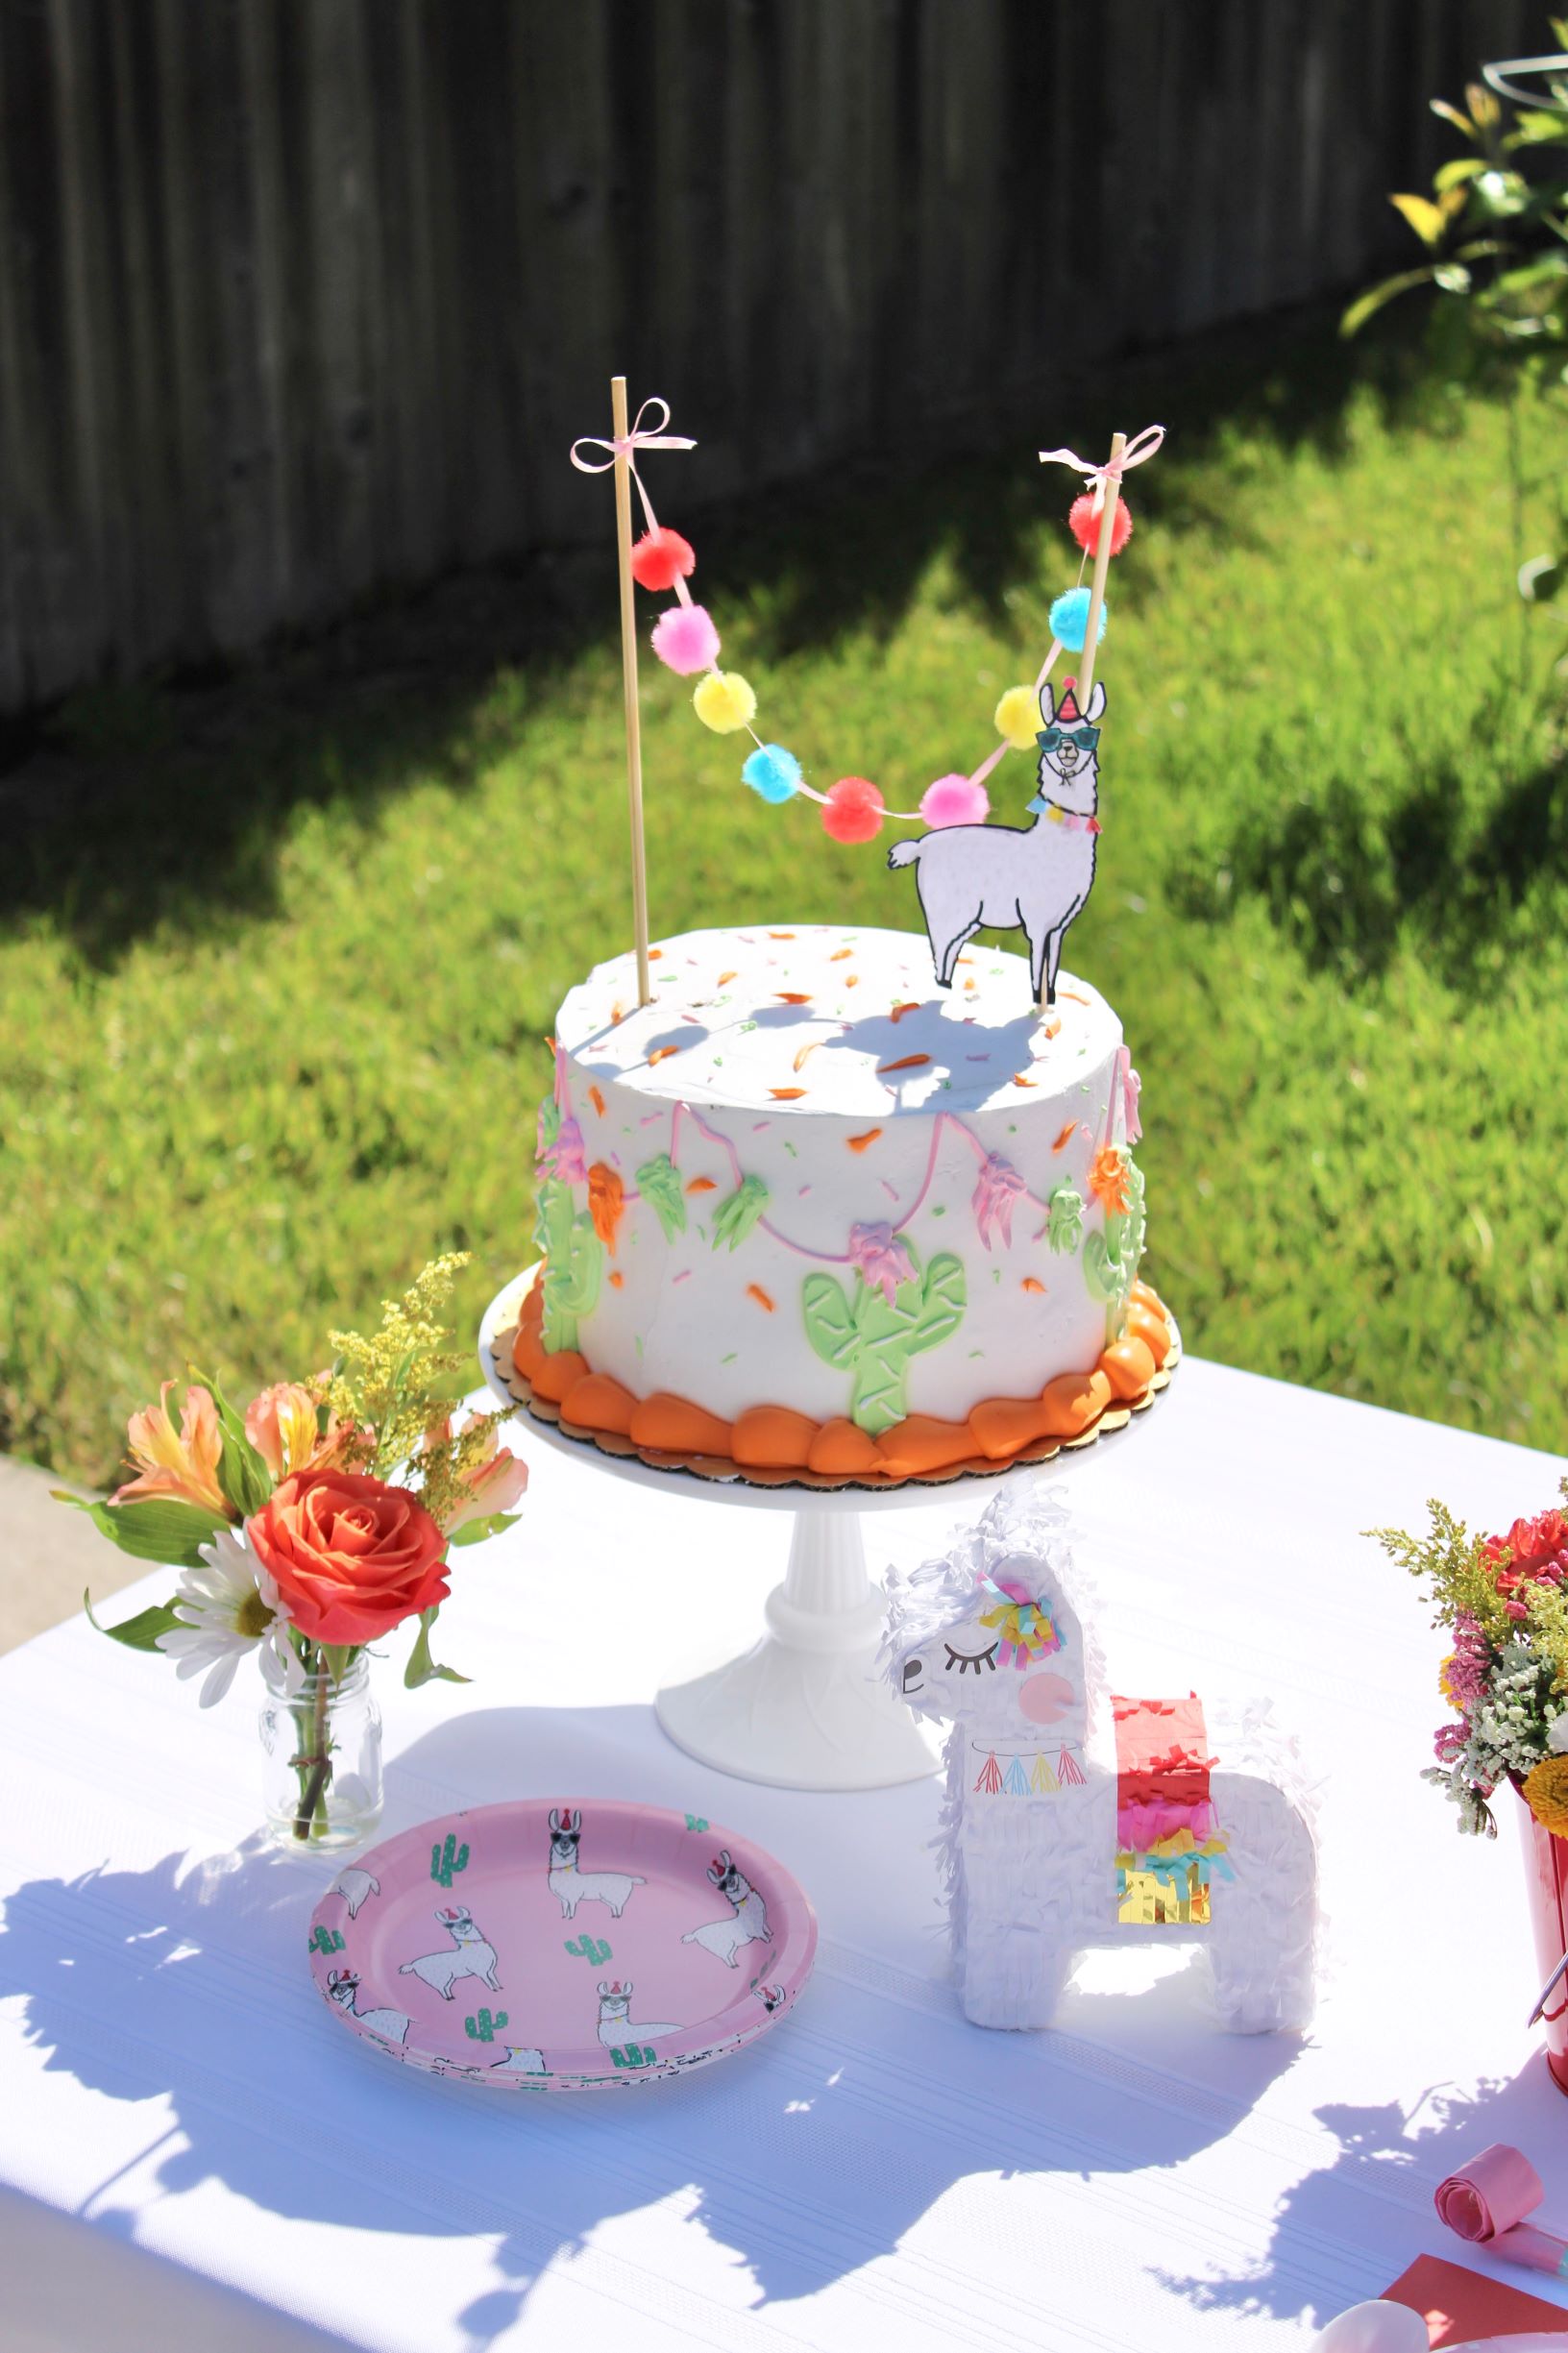 Pompoms Birthday Party Cake Topper | Set of 6